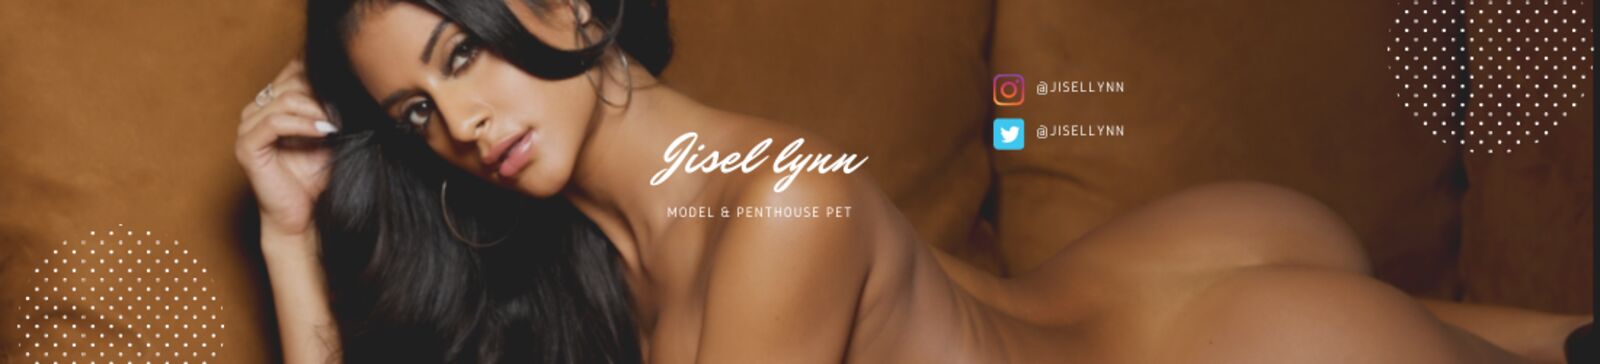 See Jisel Lynn profile